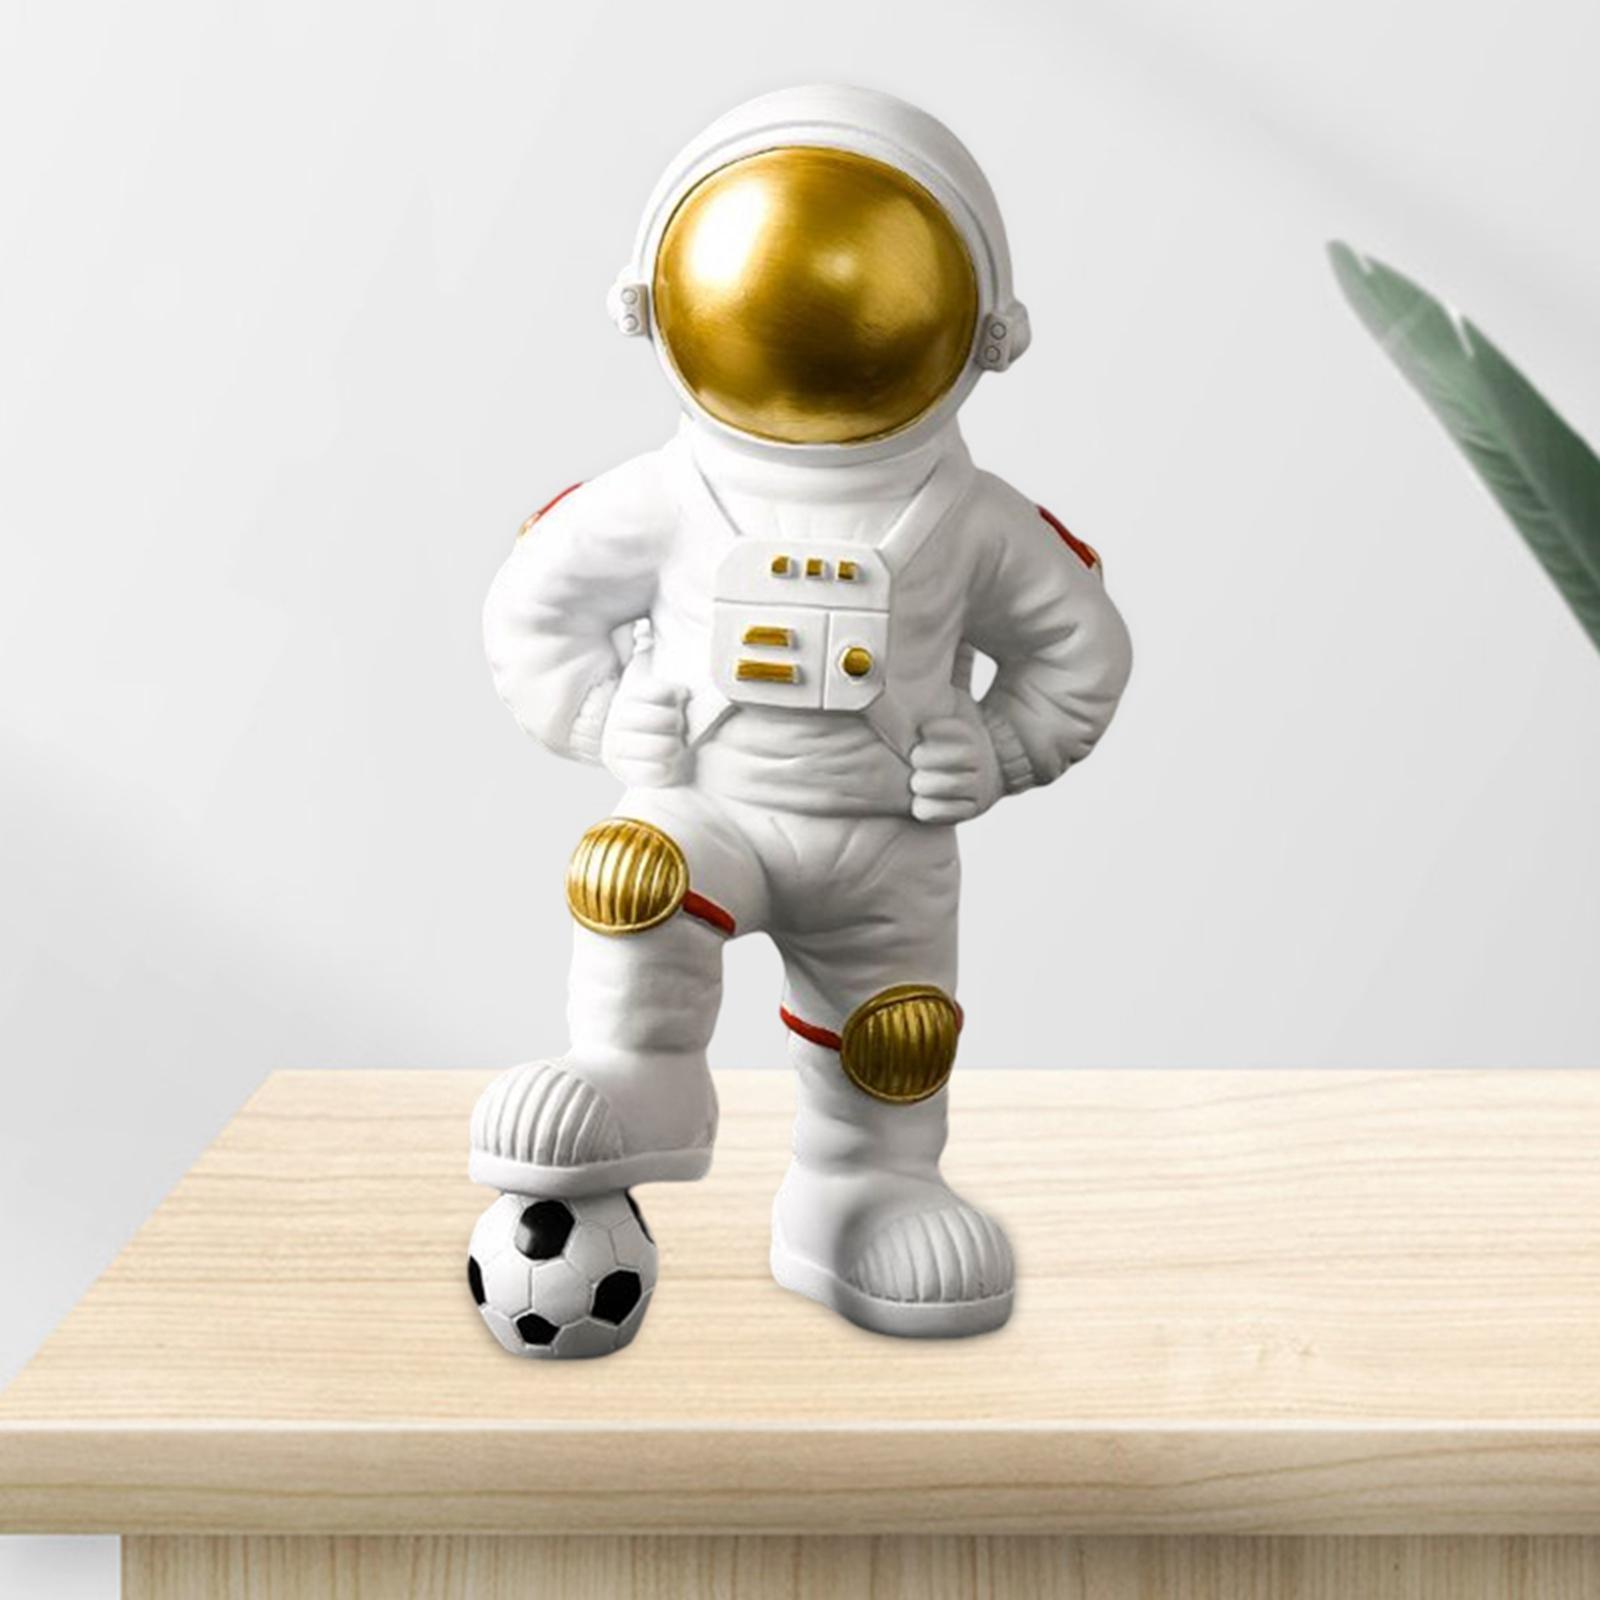 2pcs Astronaut Statue Craft Sculpture Ornament Gift Home Decor Bookshelf